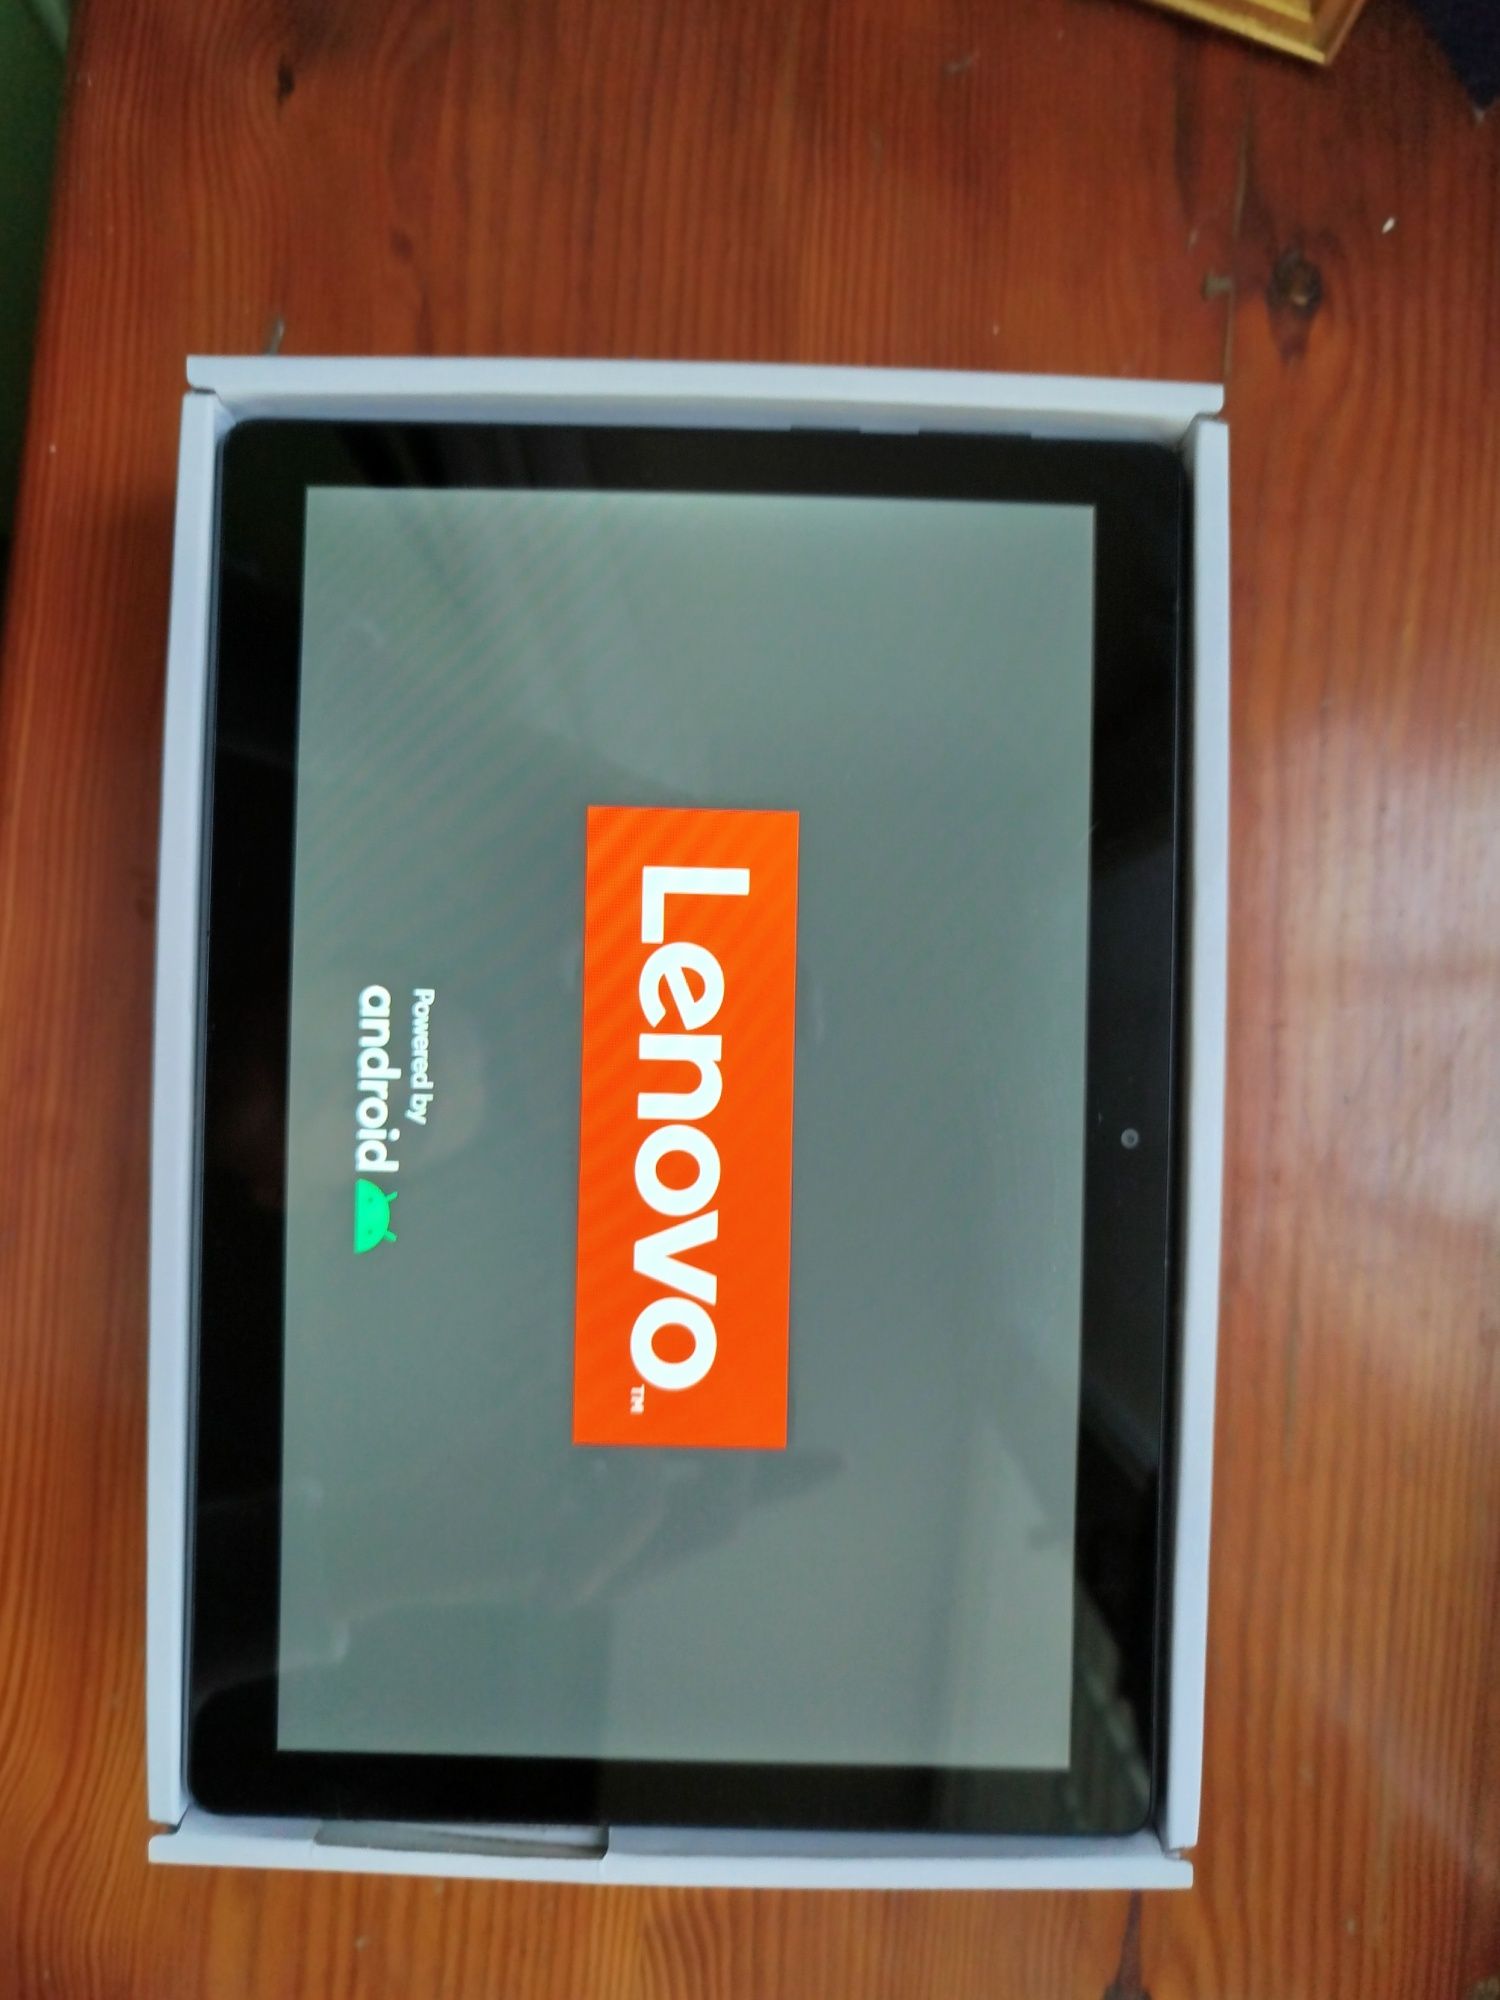 Продам планшет Lenovo